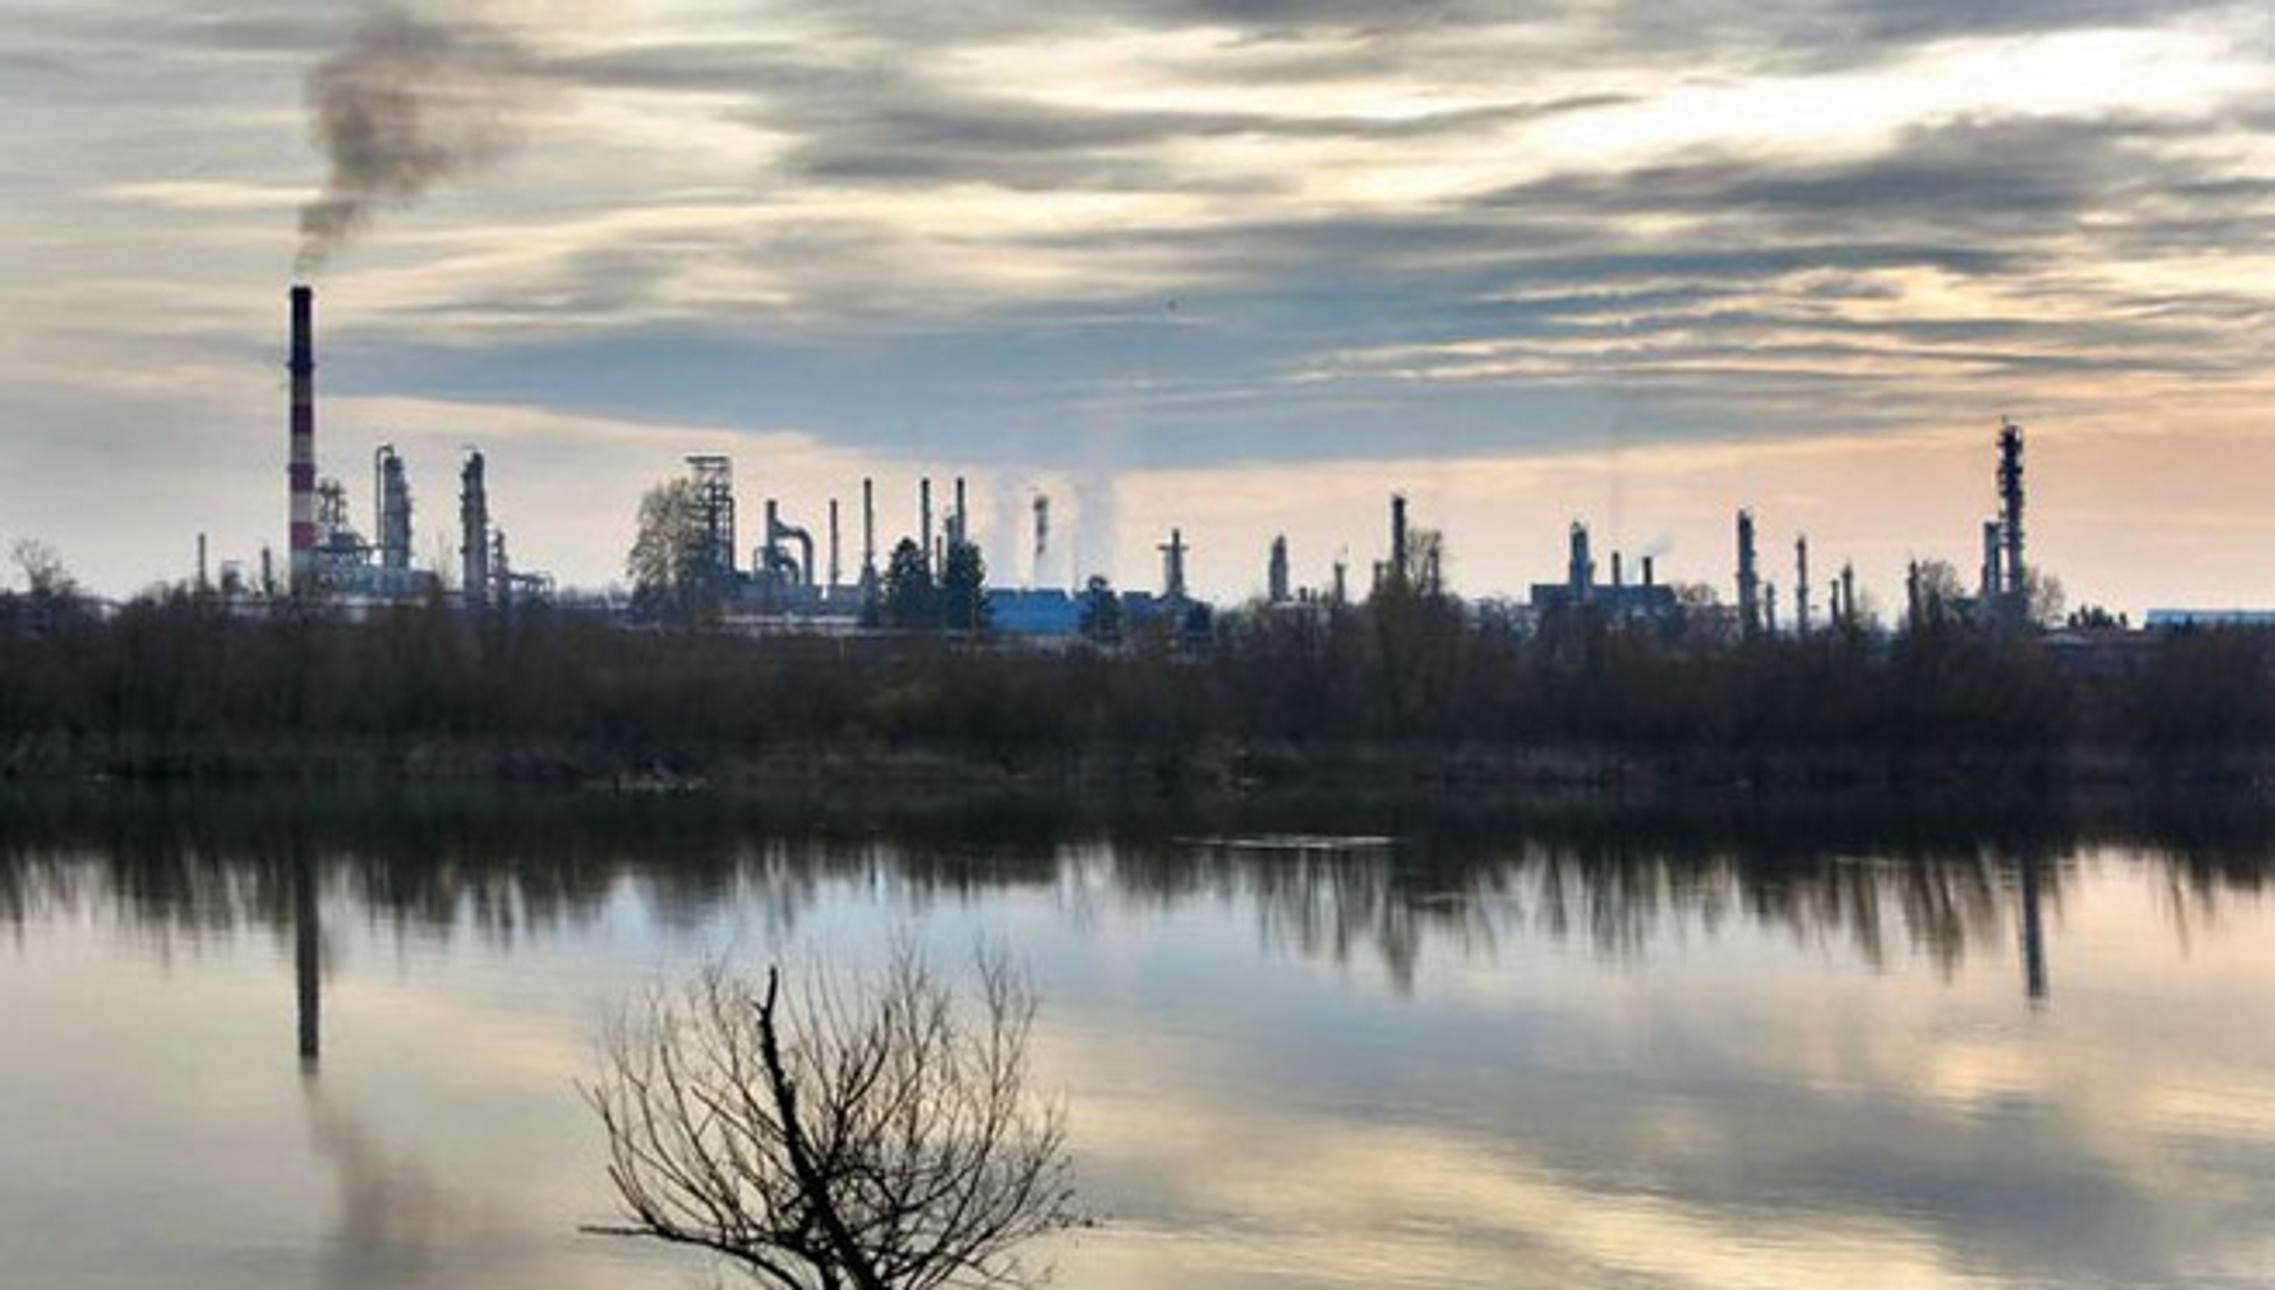 Rafinerija nafte u Bosanskom Brodu